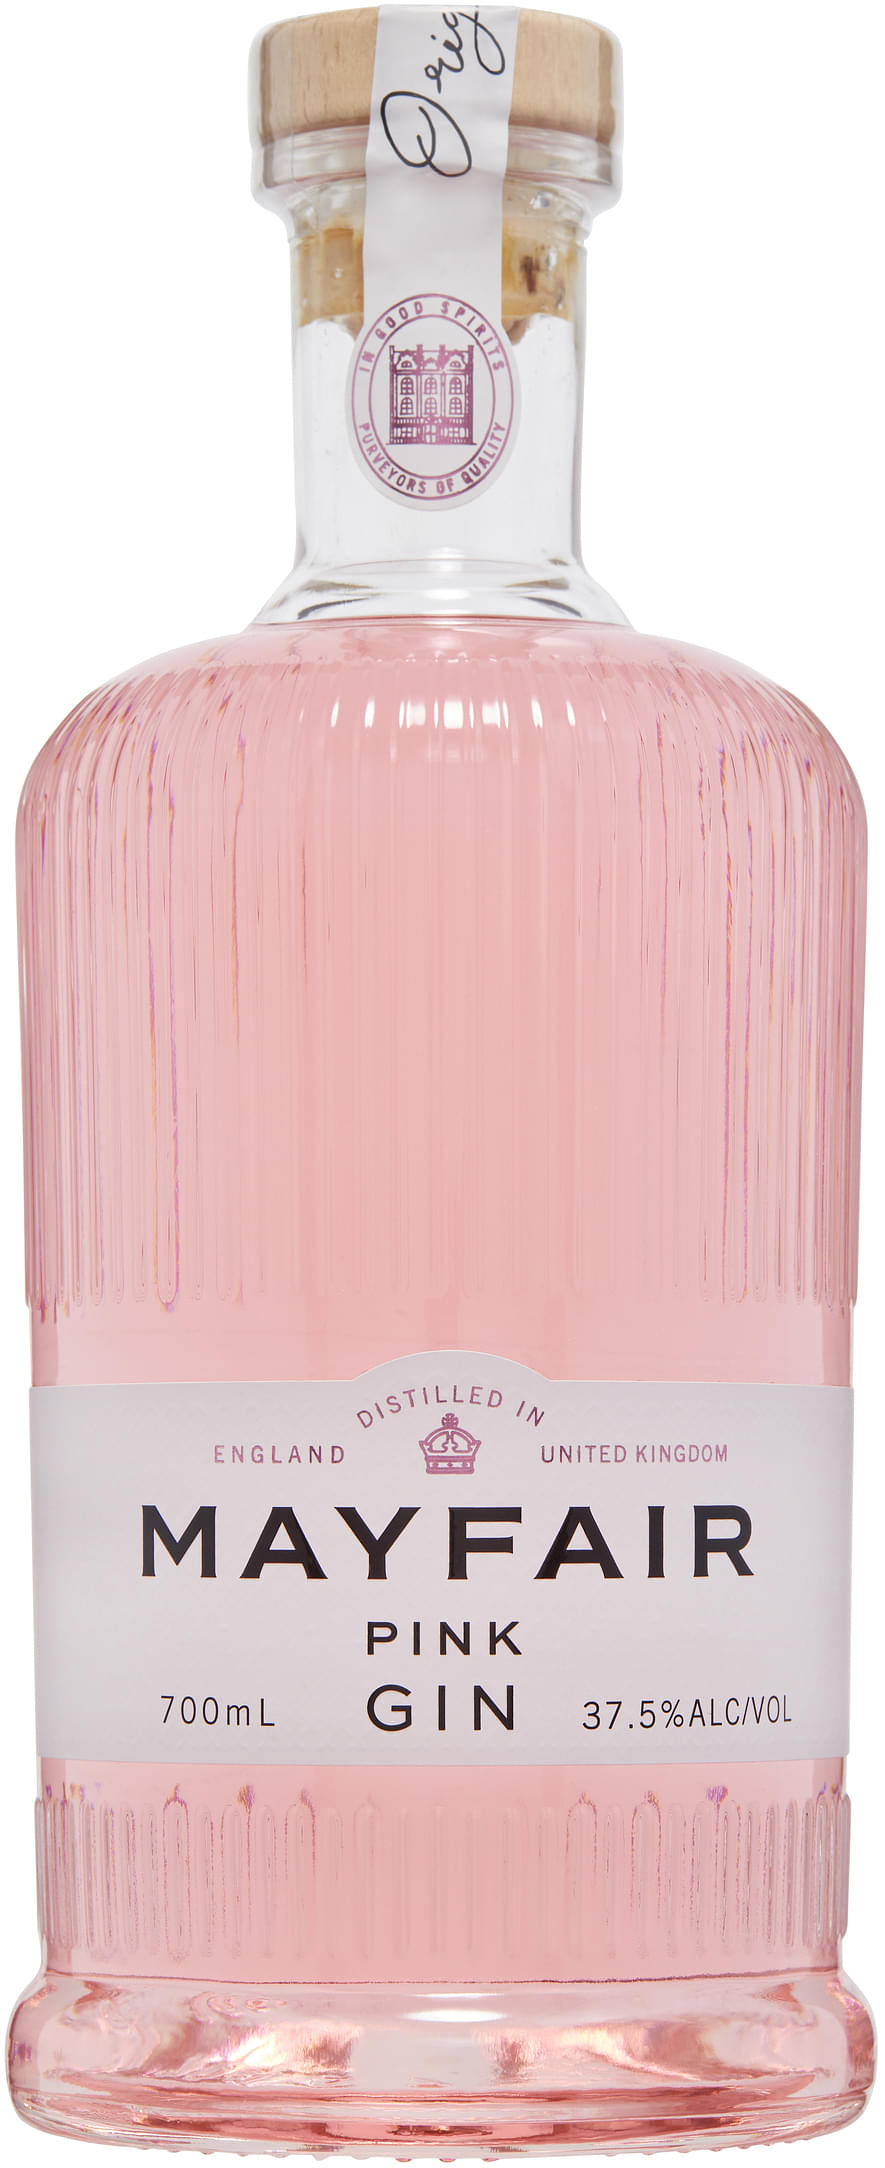 Mayfair Pink Gin